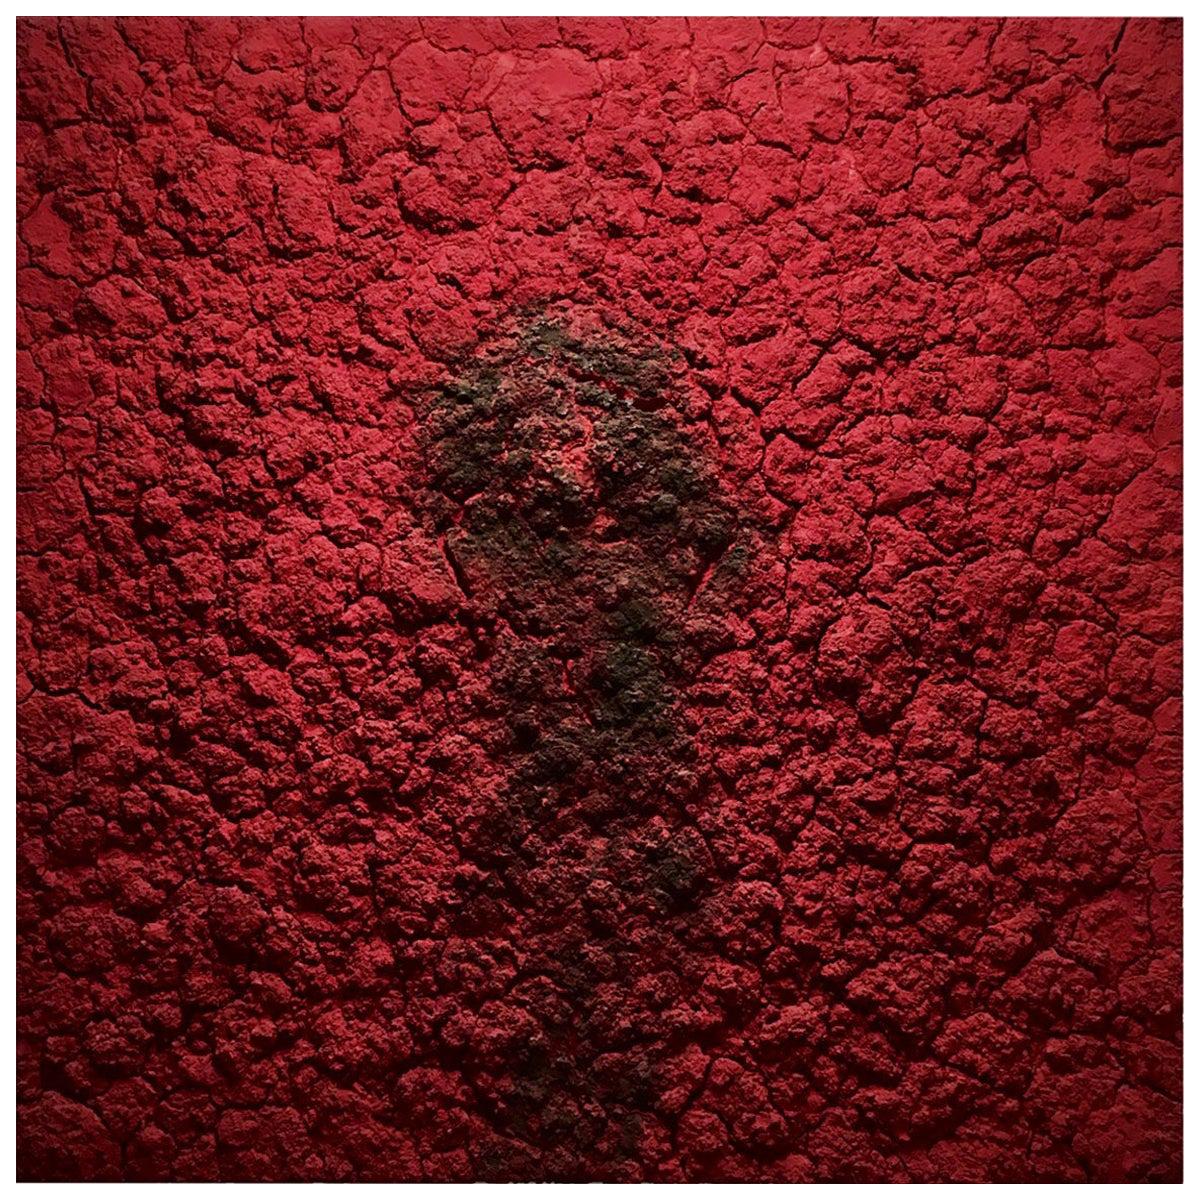 Bosco Sodi Contemporary Mixed-Media on Canvas Red Artwork, 2012